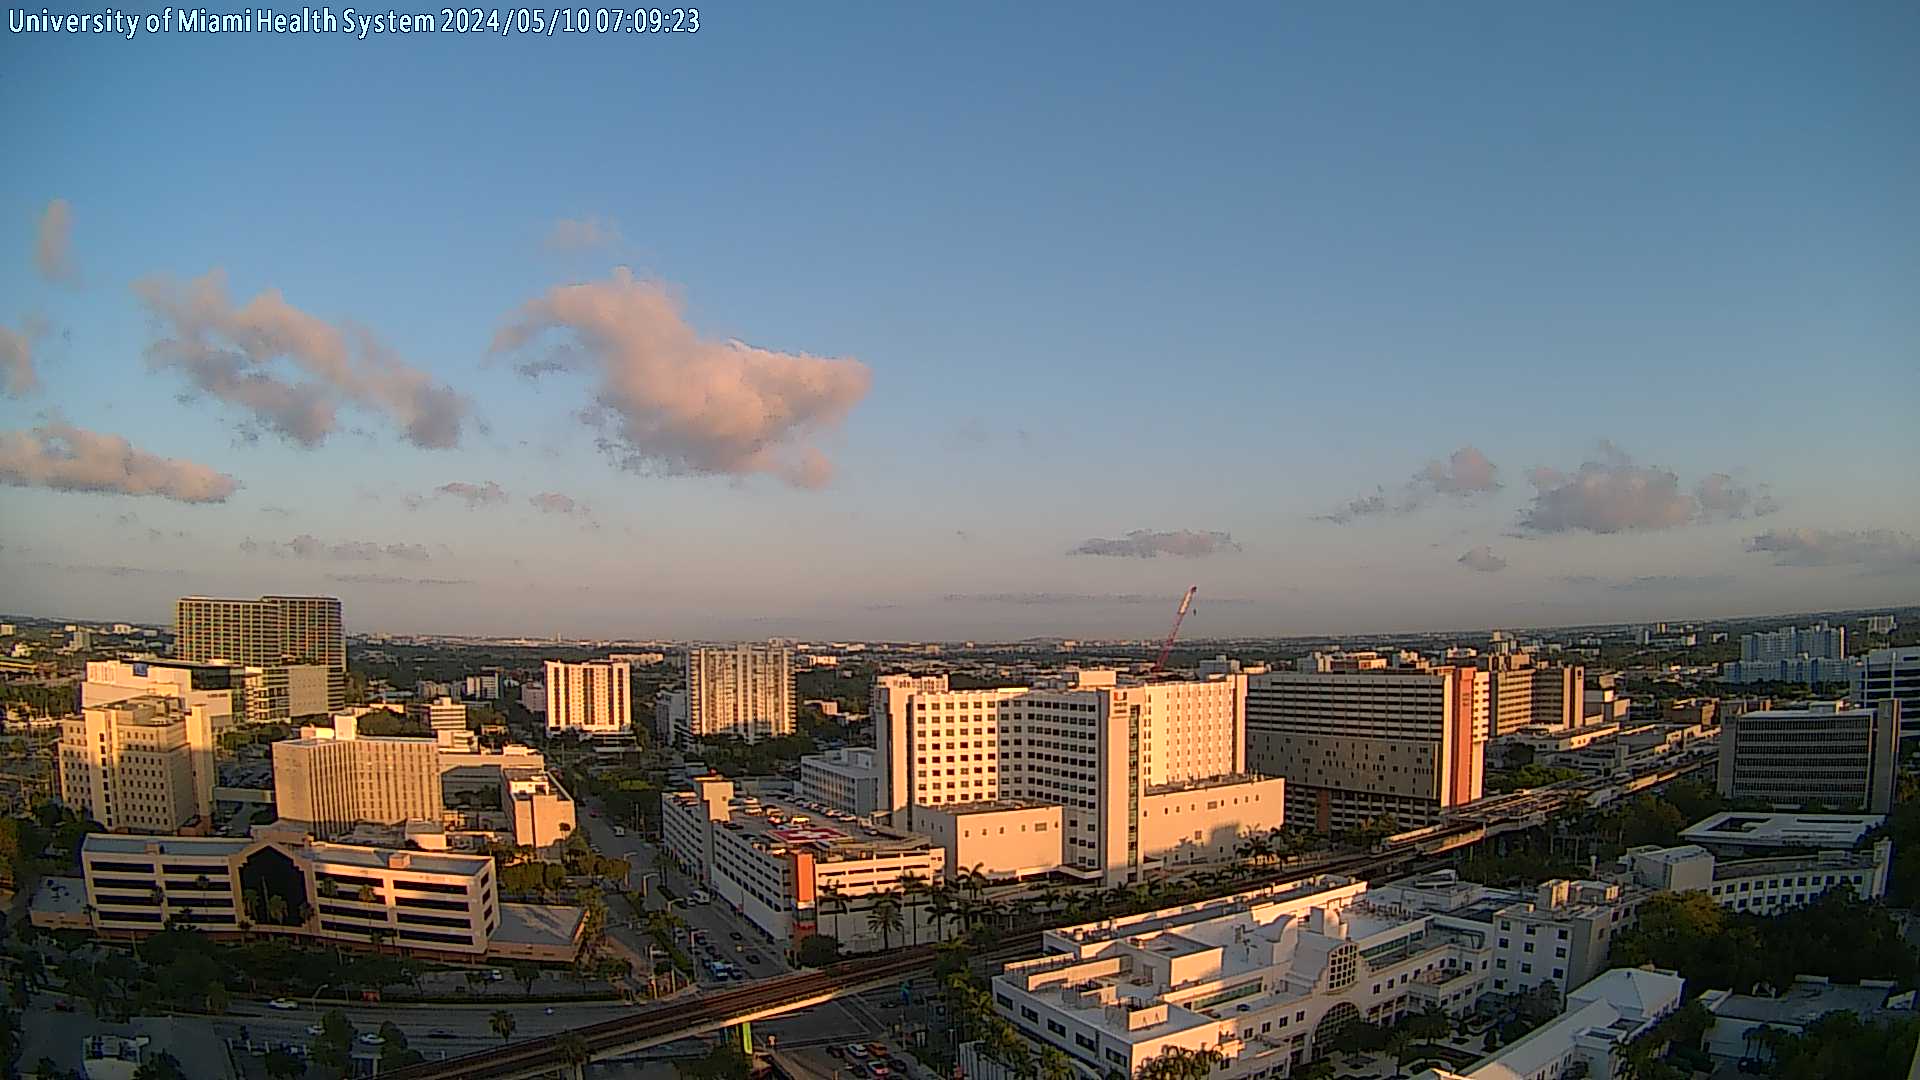  WeatherSTEM Cloud Camera UHealthWxSTEM in Miami Dade County, Florida FL at U of Miami Health System